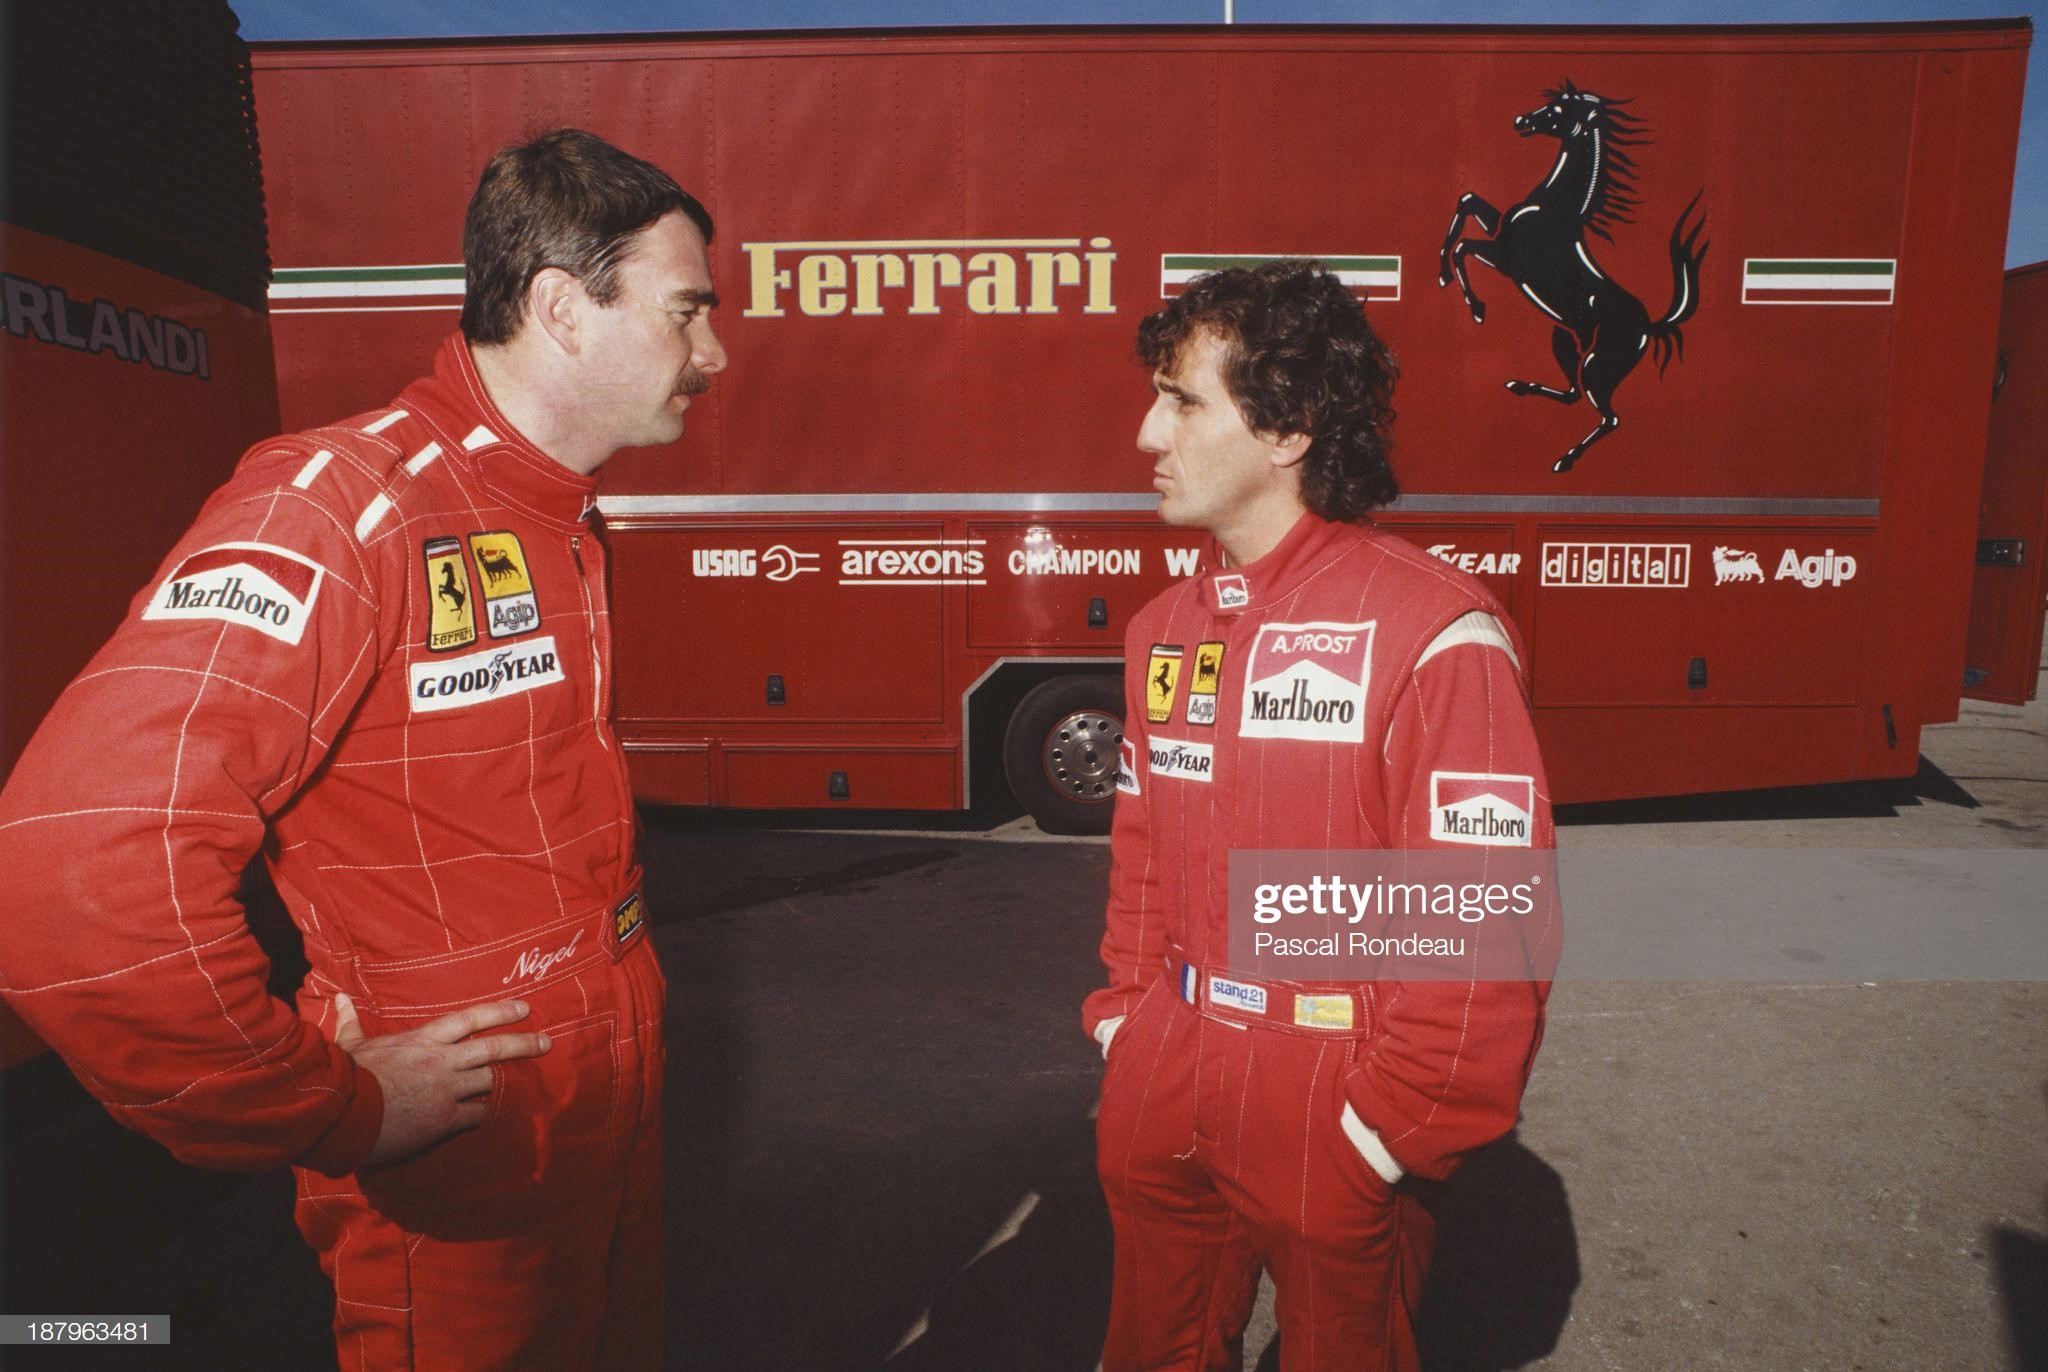 Nigel Mansell and Alain Prost at Ferrari.